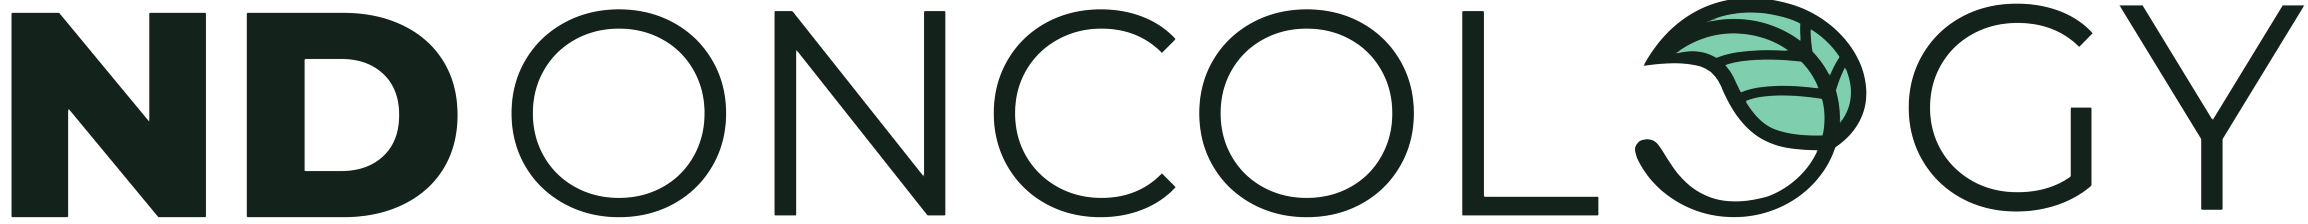 NDoncology logo